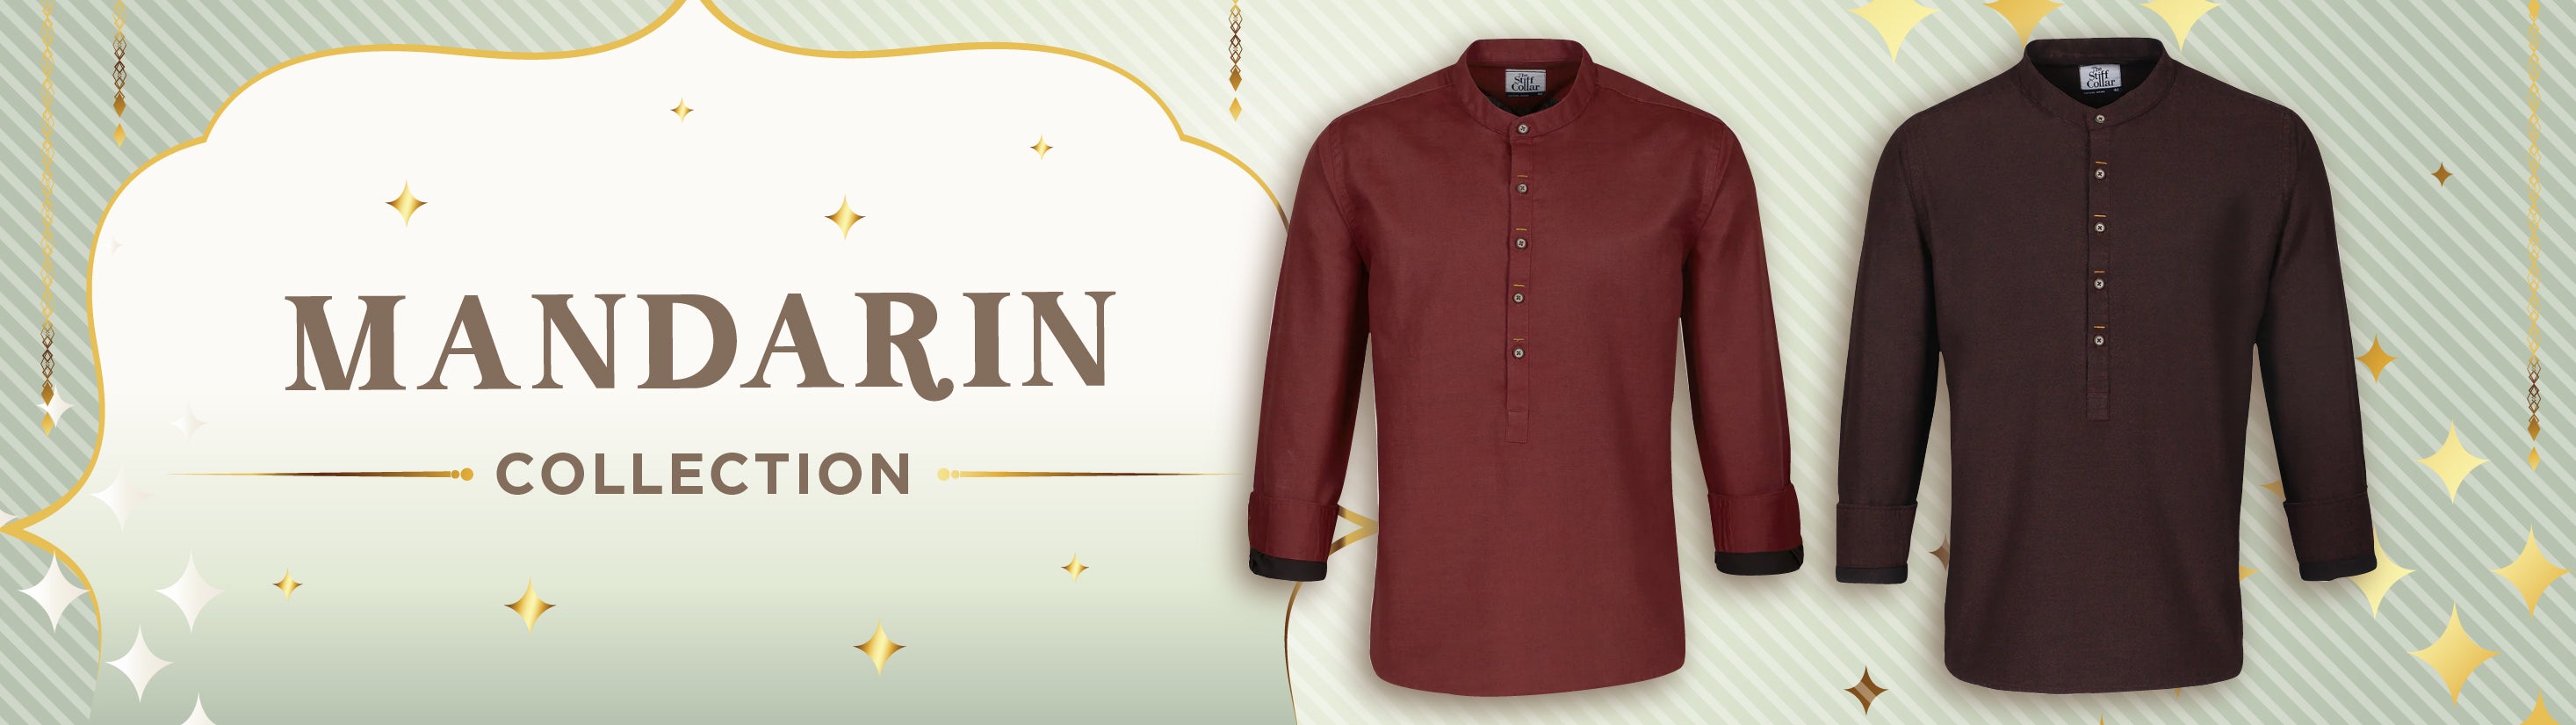 Mandarin Collar Shirts - Buy Mandarin Collar Shirts Online Starting at Just  ₹278 | Meesho